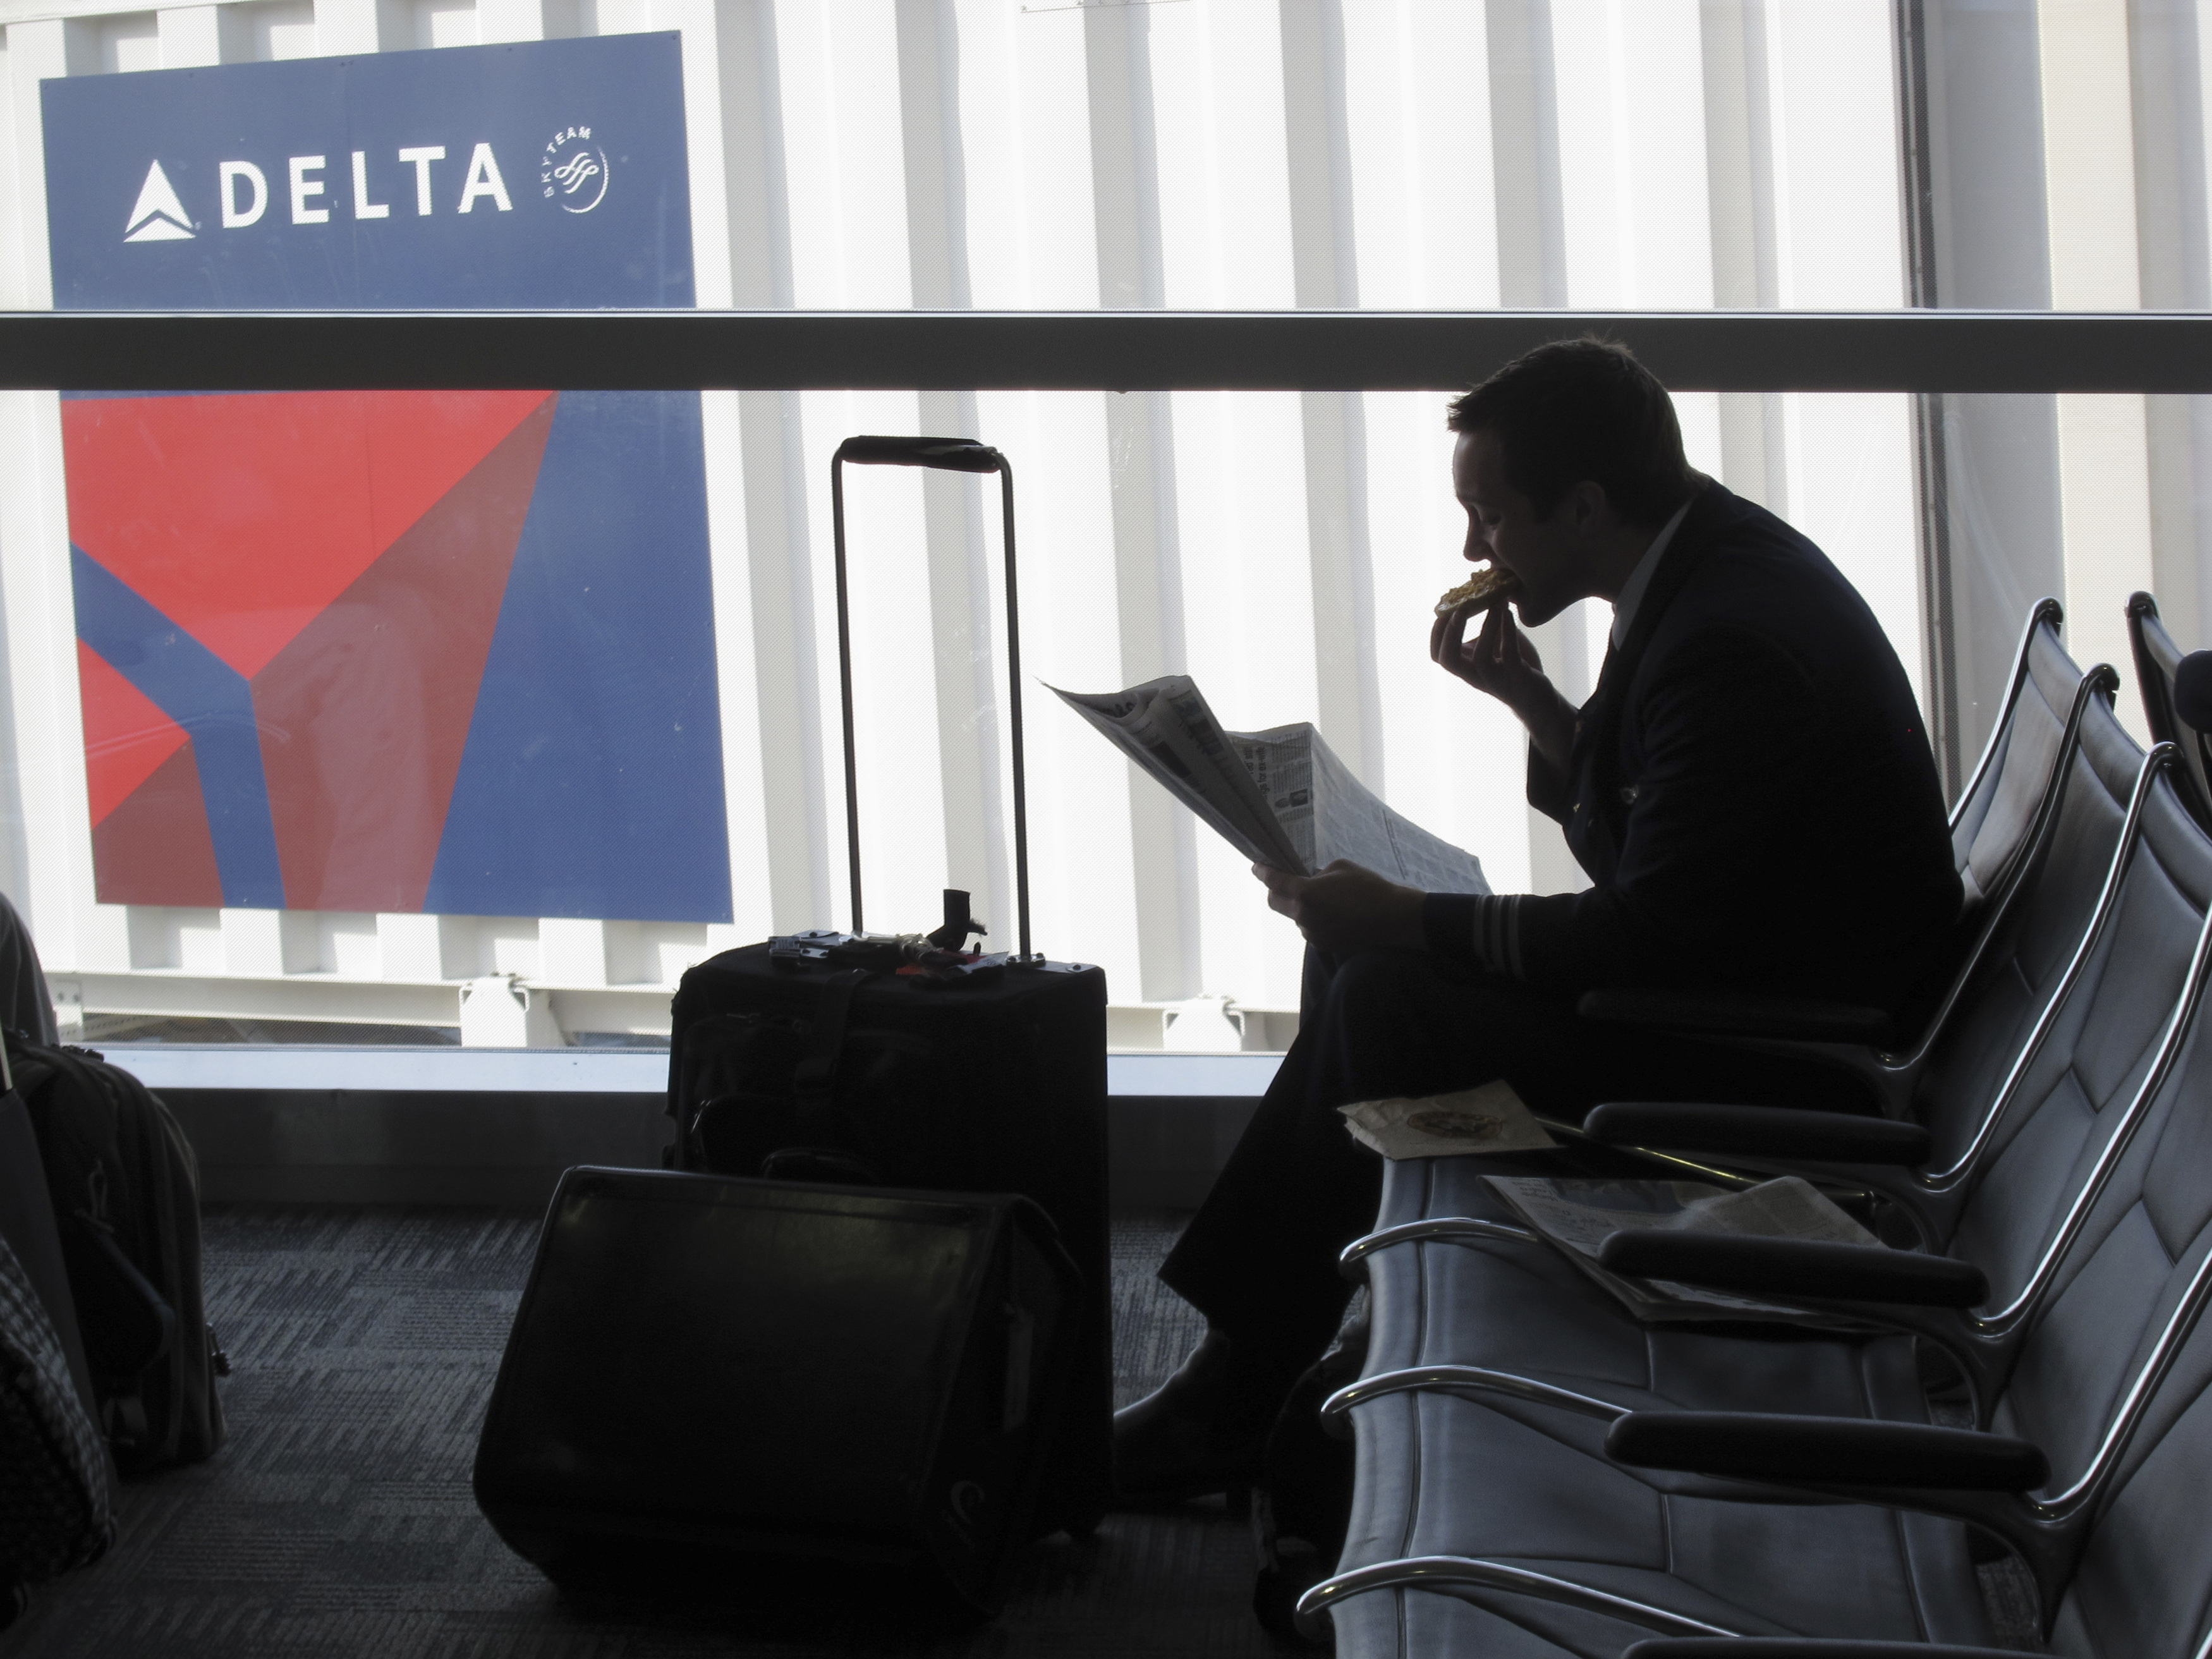 Passenger waits for his flight near a Delta Air Lines logo at Detriot Airport